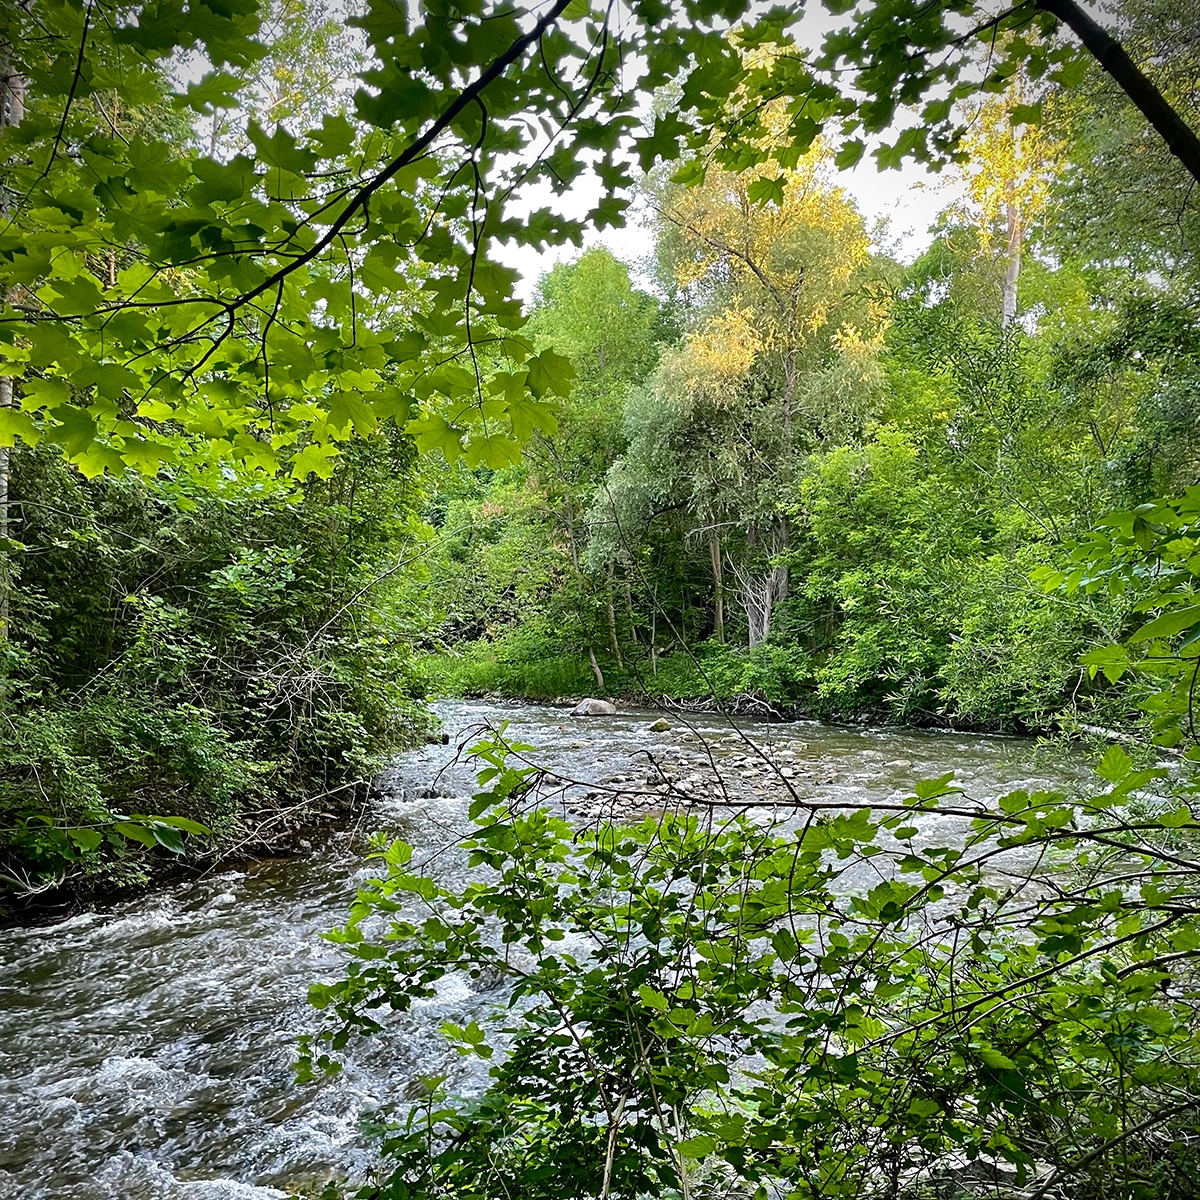 The Bear River in Petoskey, Michigan.